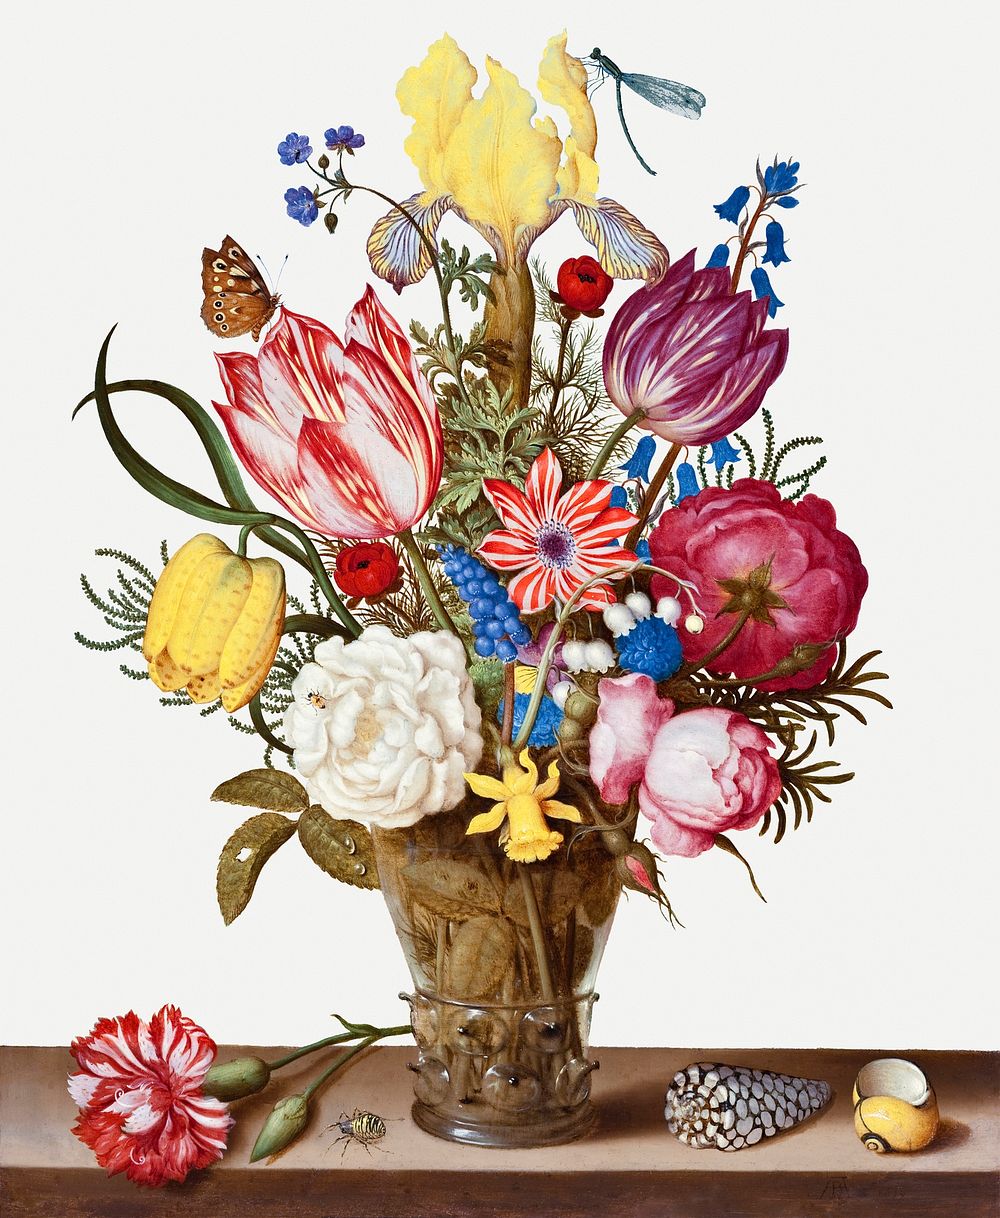 Vintage flower illustration psd, remix from artworks by Ambrosius Bosschaert